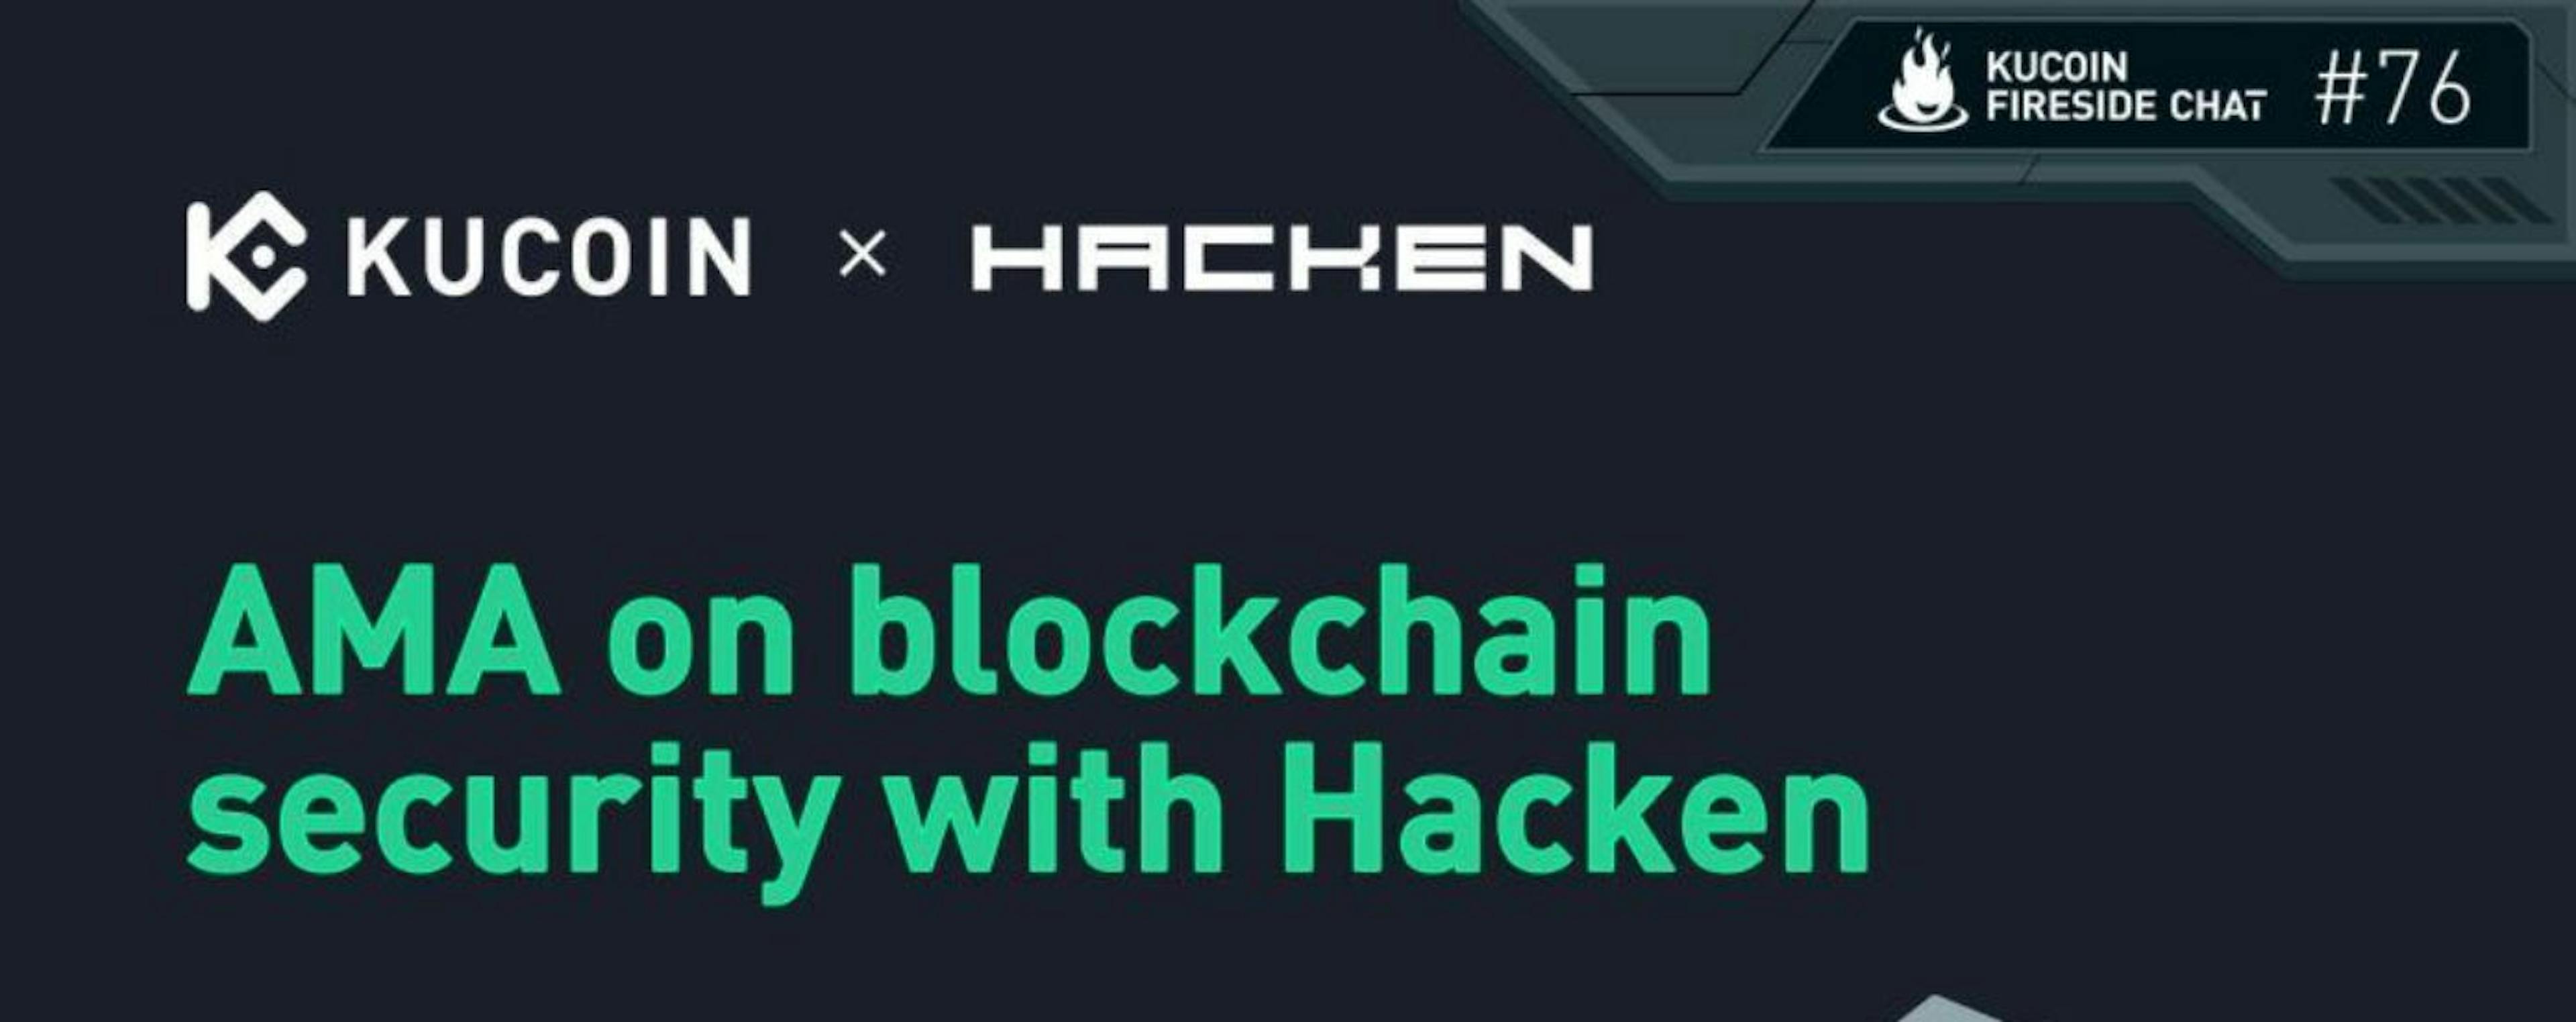 featured image - Segurança para Blockchain com KuCoin e Hacken